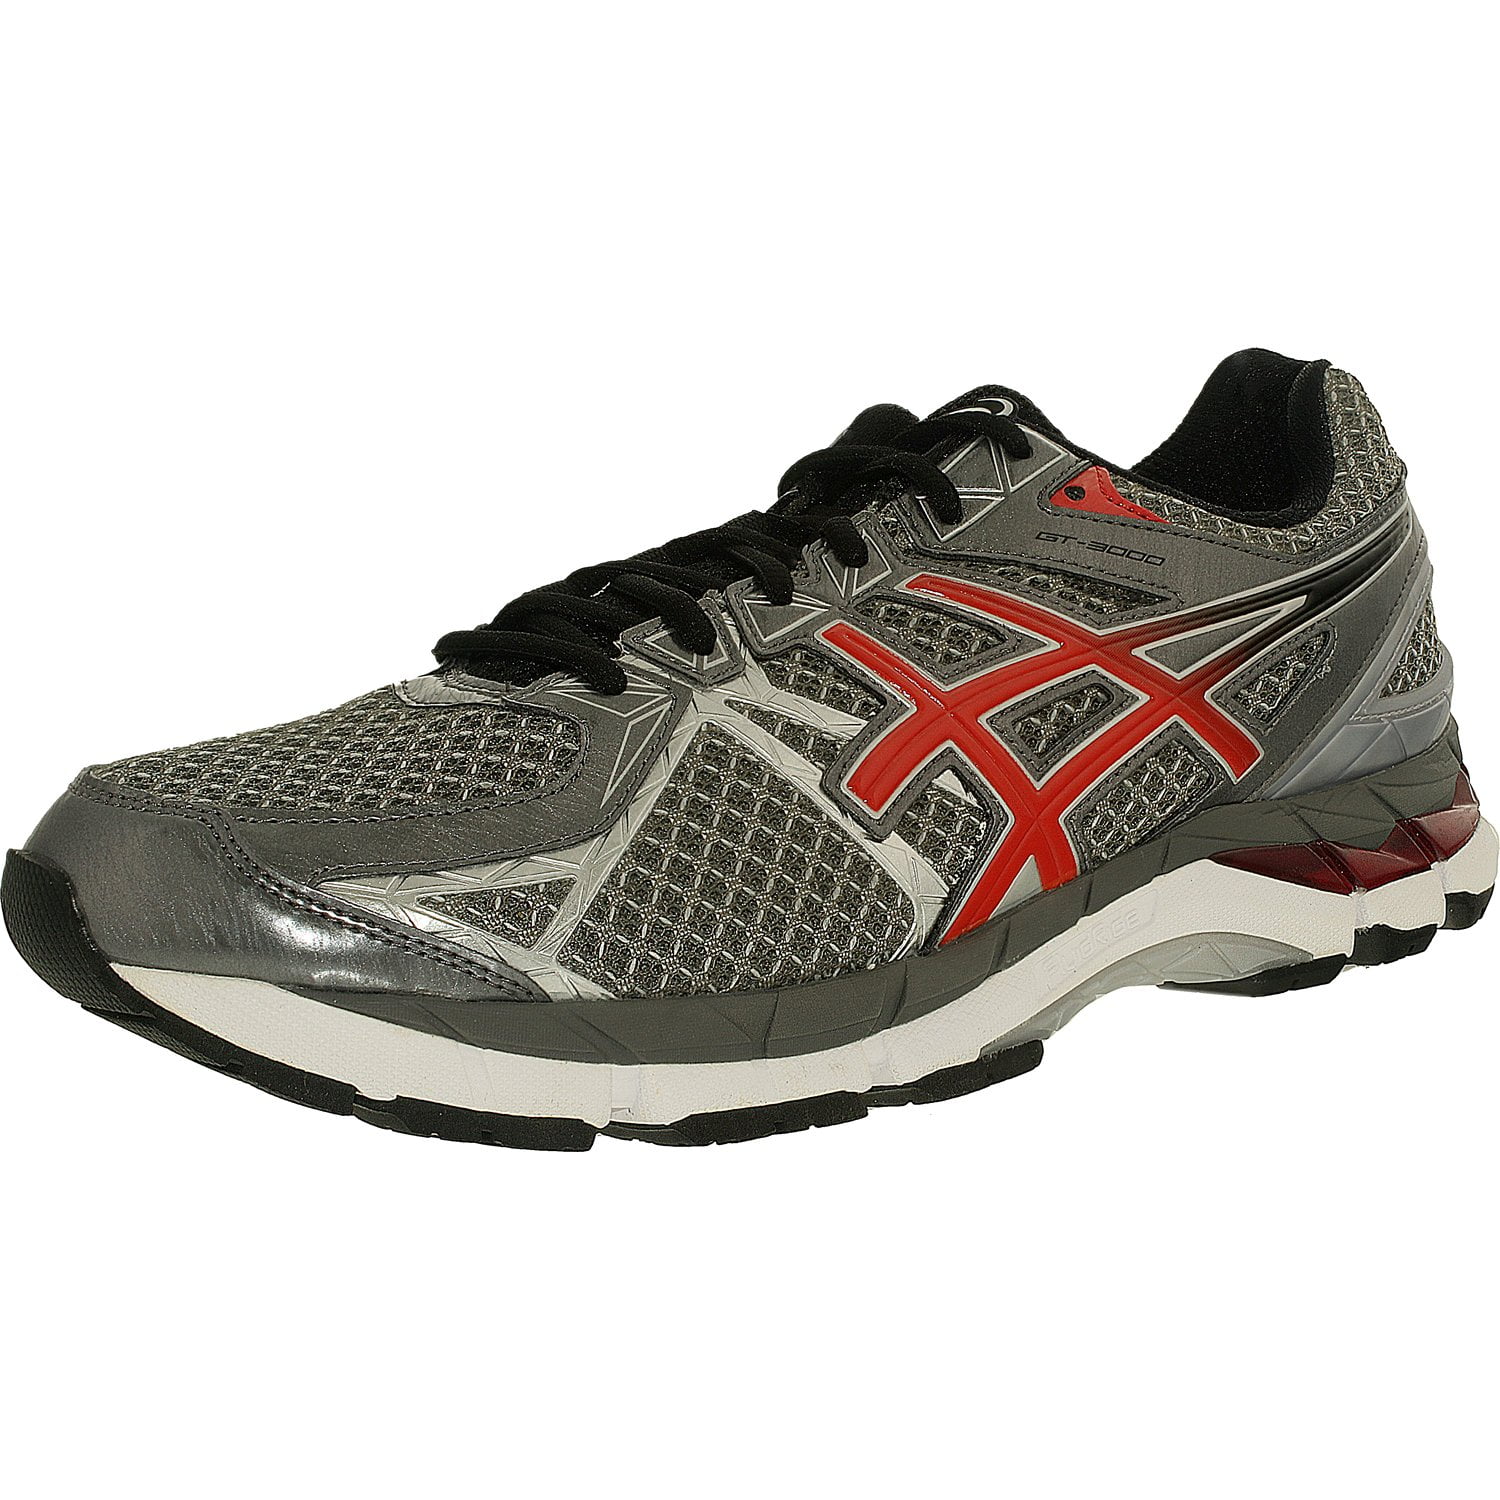 Men's Gt-3000 Men's Carbon/Red Pepper/Lightning Ankle-High Tennis Shoe - 9.5M - Walmart.com